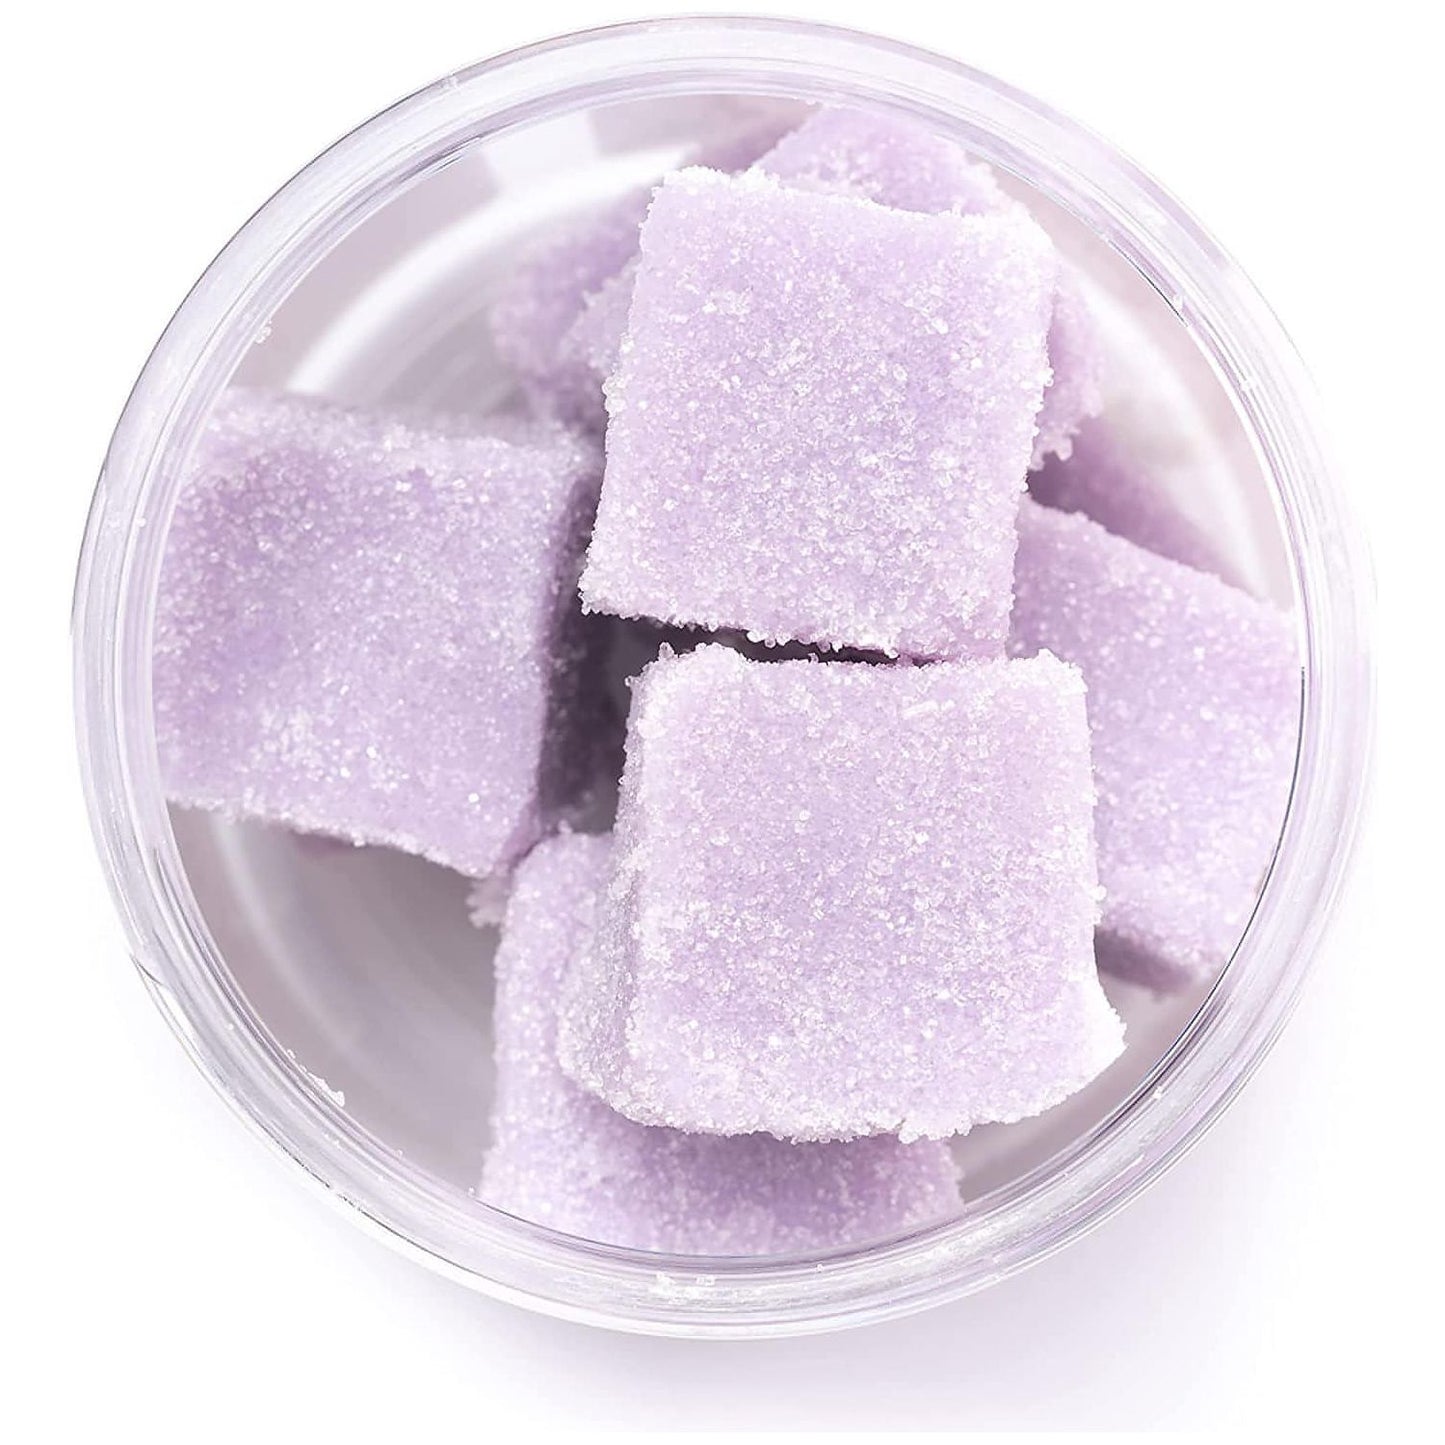 Harper + Ari Sugar Scrub Cubes (Dream, 10 Cubes/156 g), Exfoliating Body Scrub